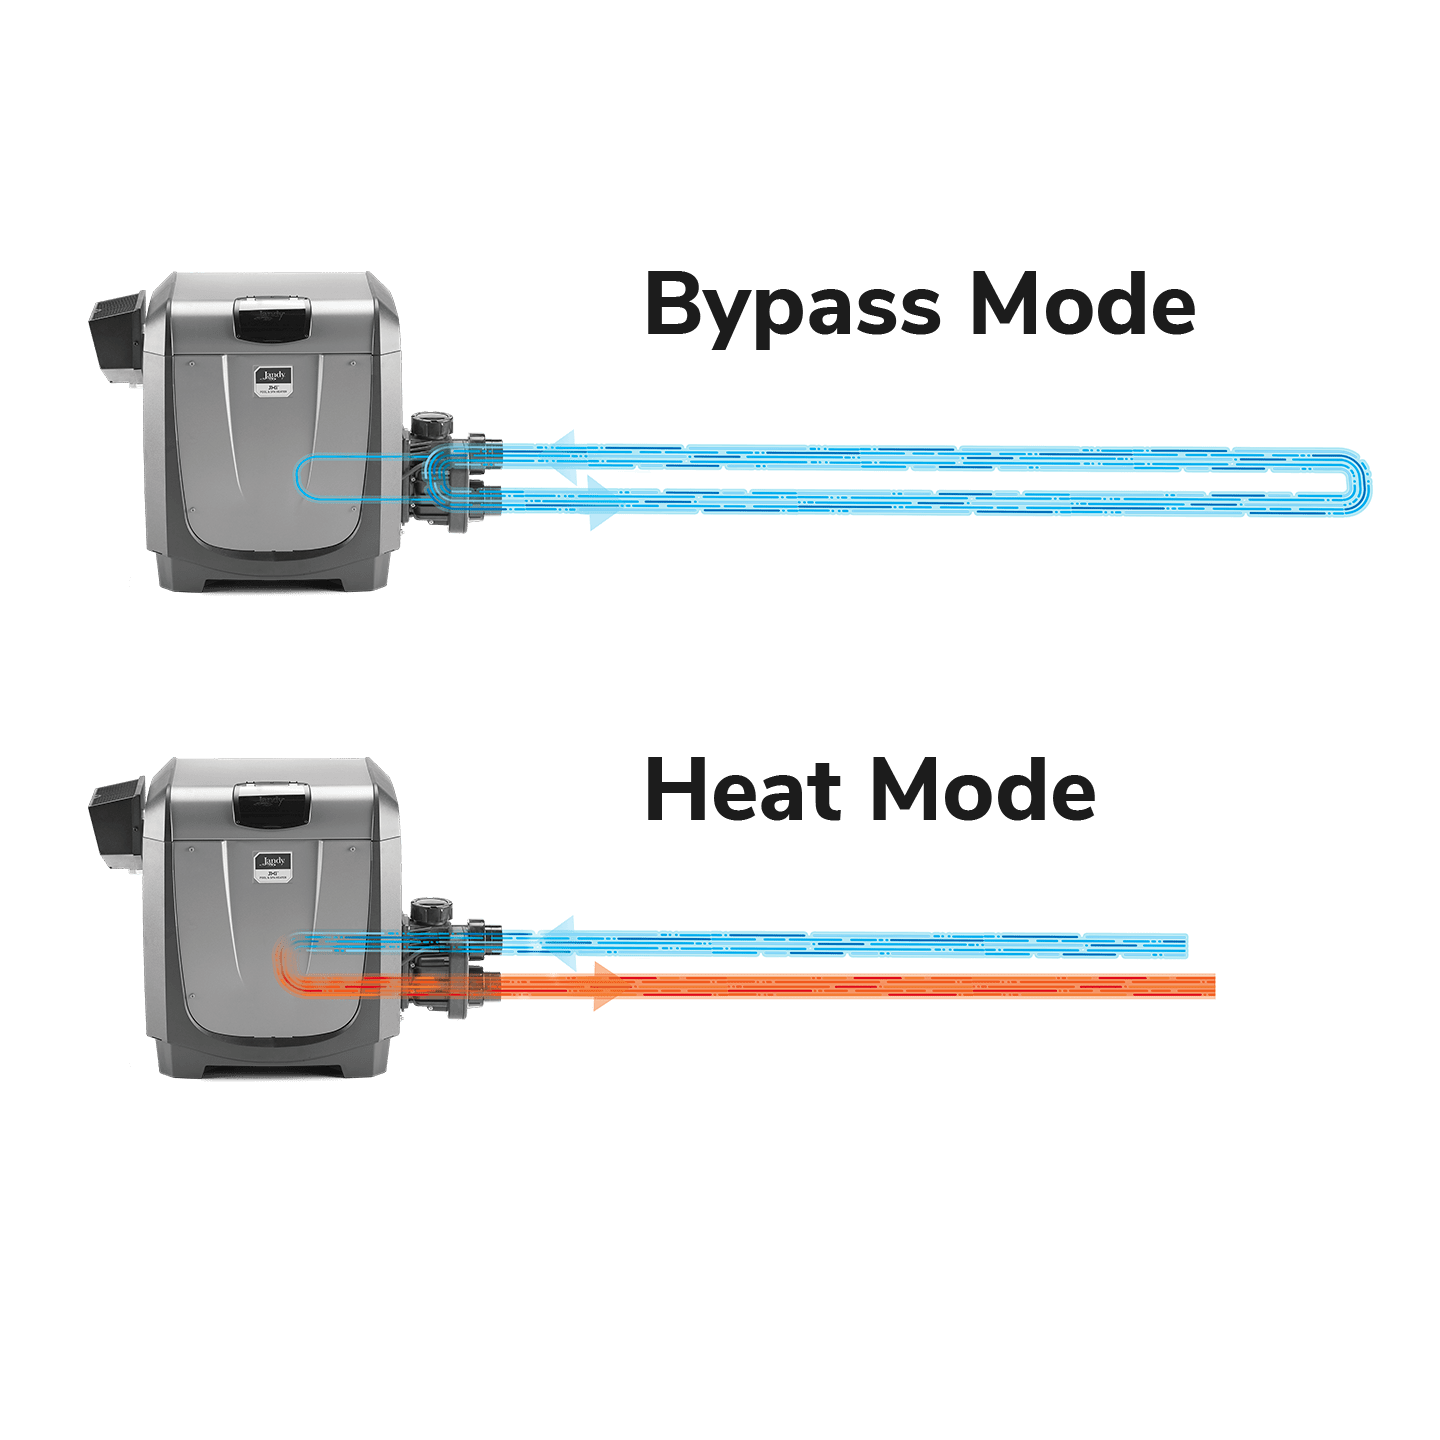 Heat Mode and Bypass Mode